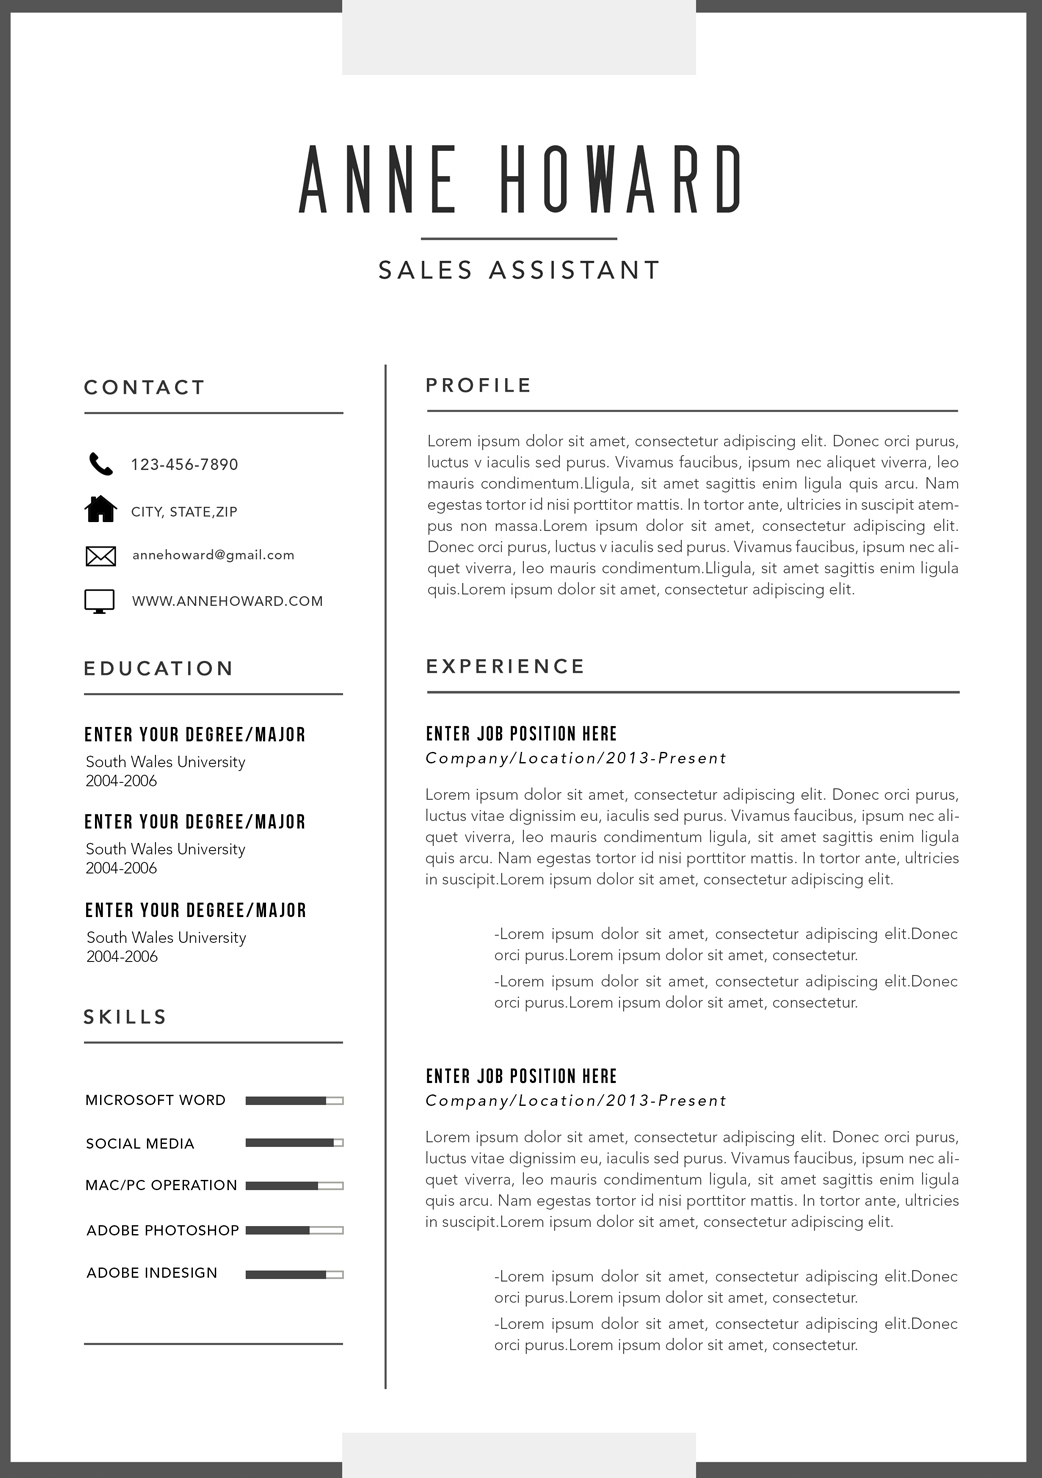 resume-modern-resume-template-resume-templates-free-for-mac-pjaweshots